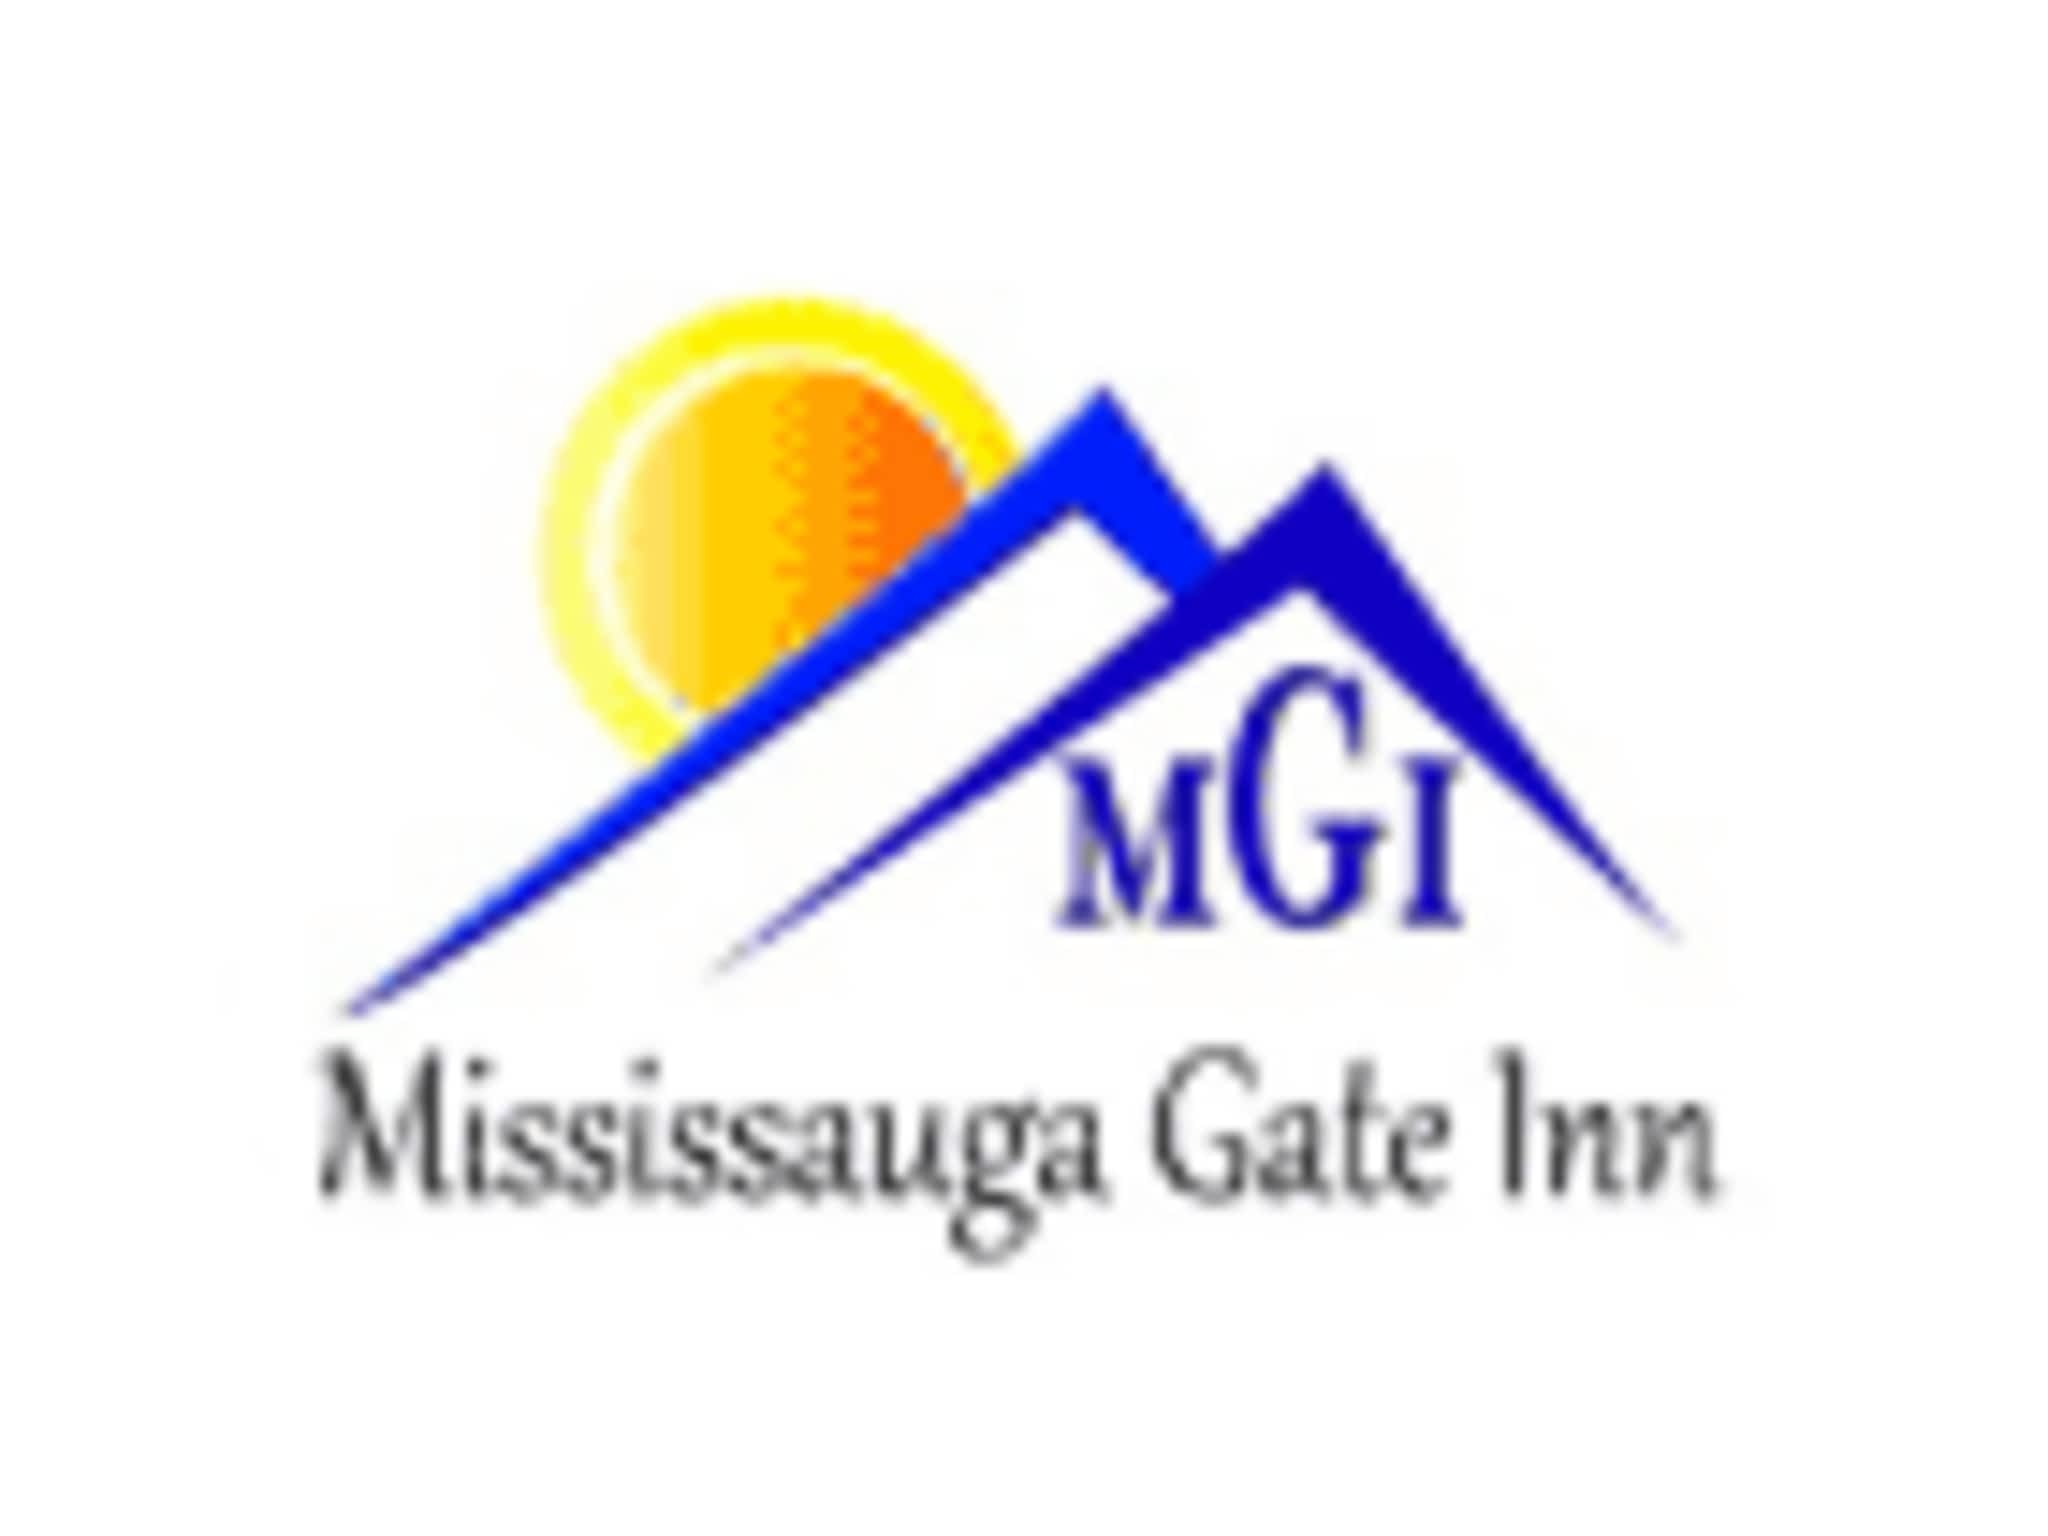 photo Mississauga Gate Inn